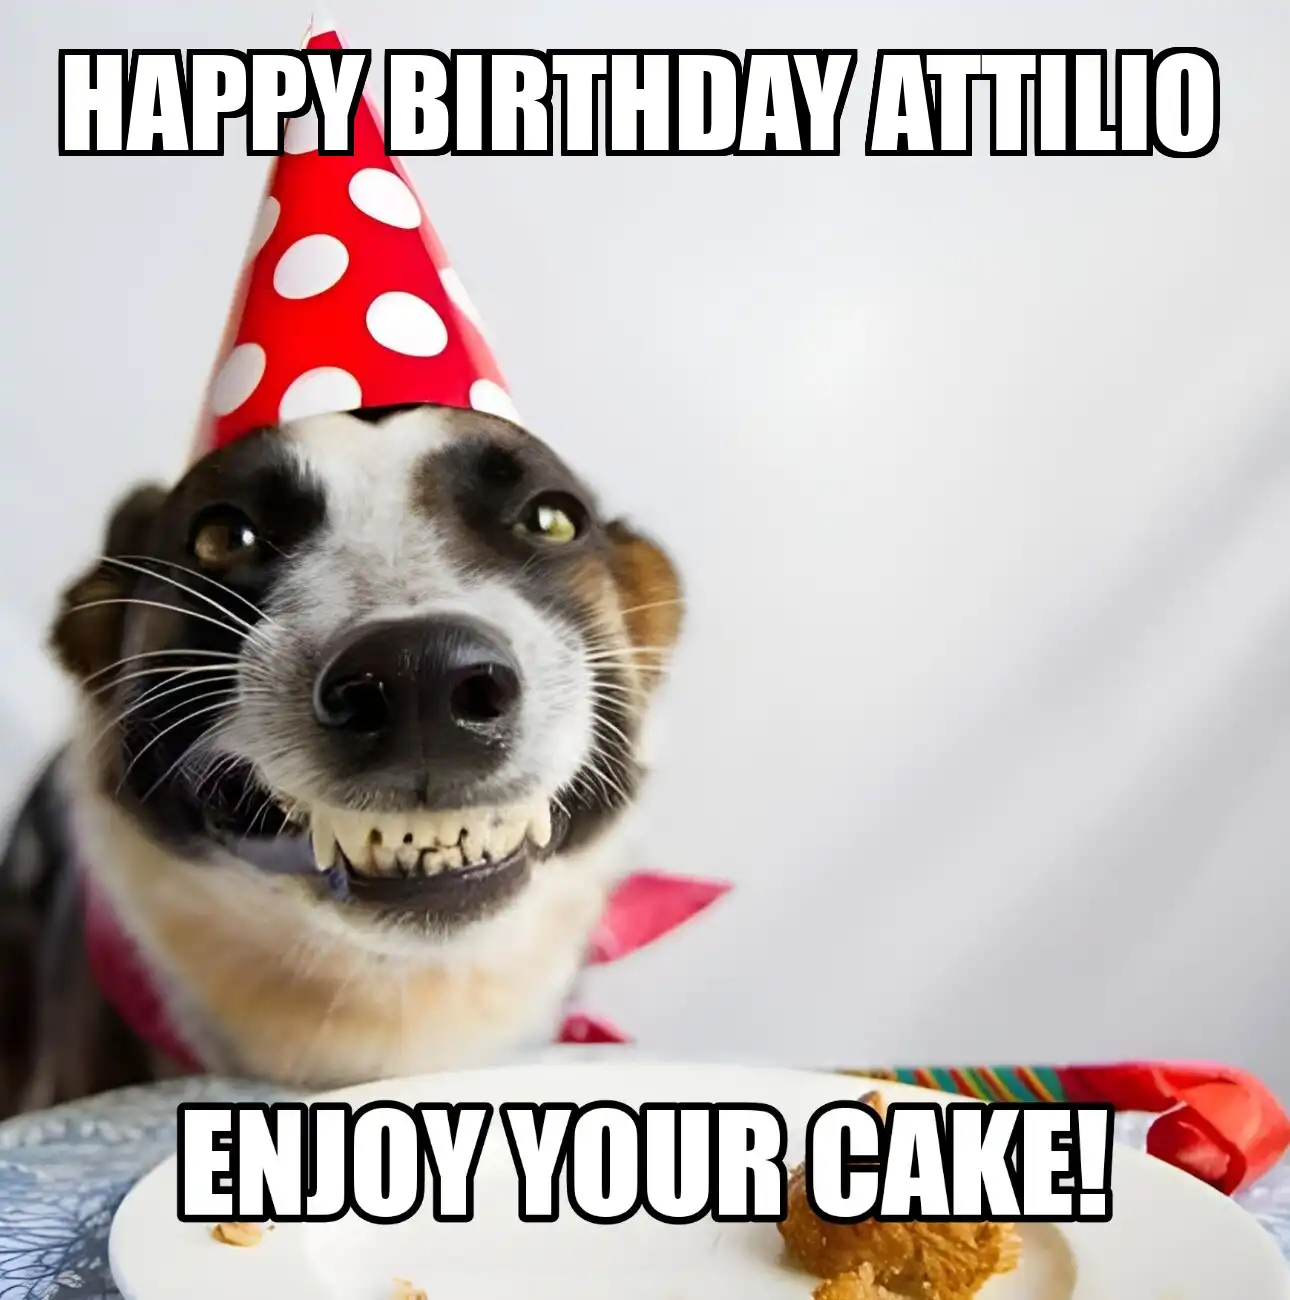 Happy Birthday Attilio Enjoy Your Cake Dog Meme